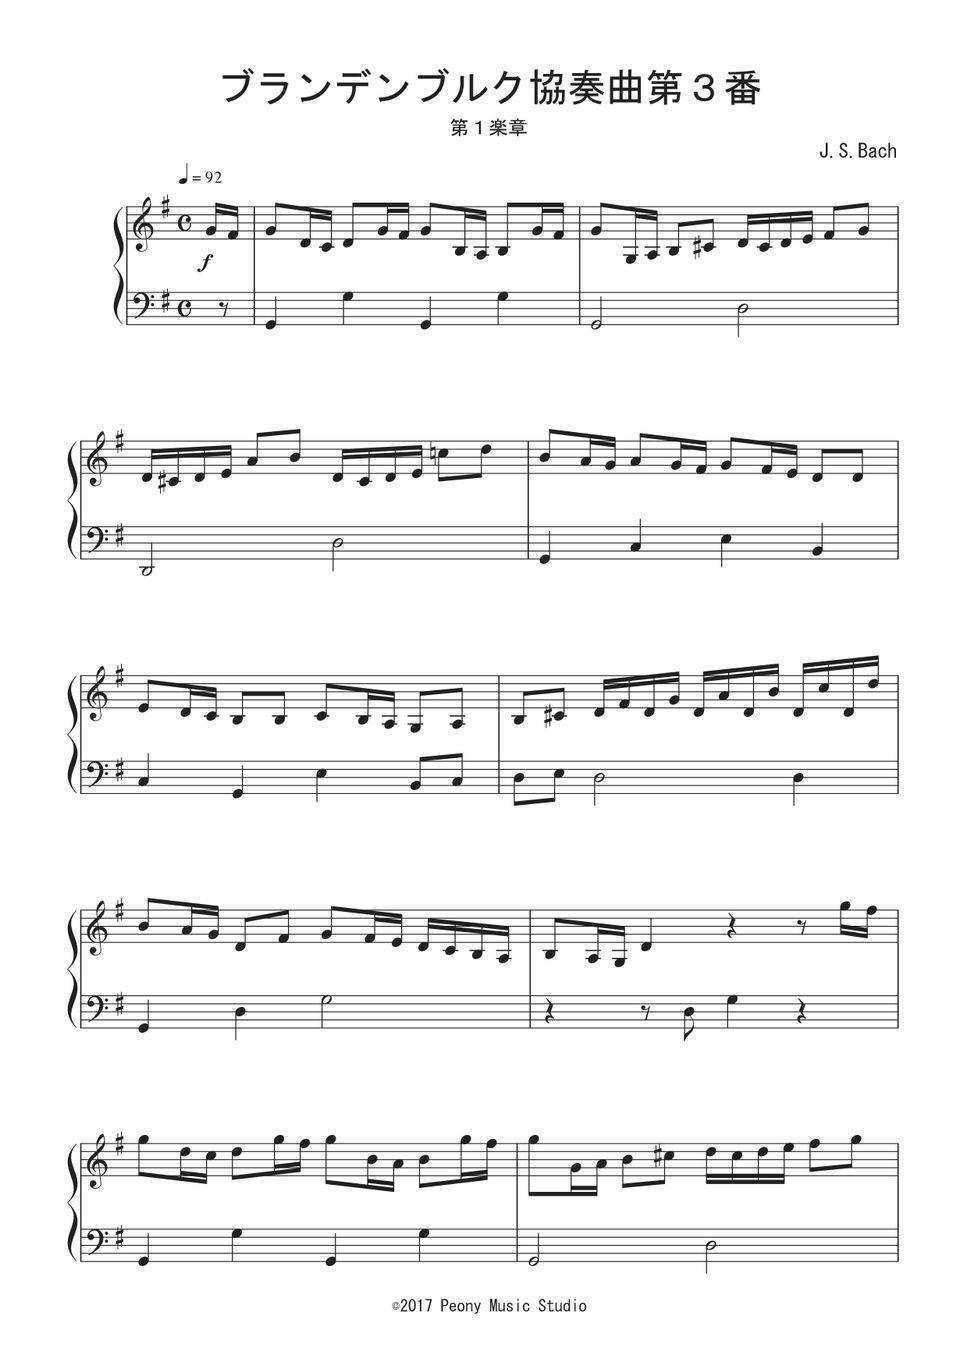 J.S.バッハ - 「ブランデンブルク協奏曲」第3番より 第1楽章 by Peony